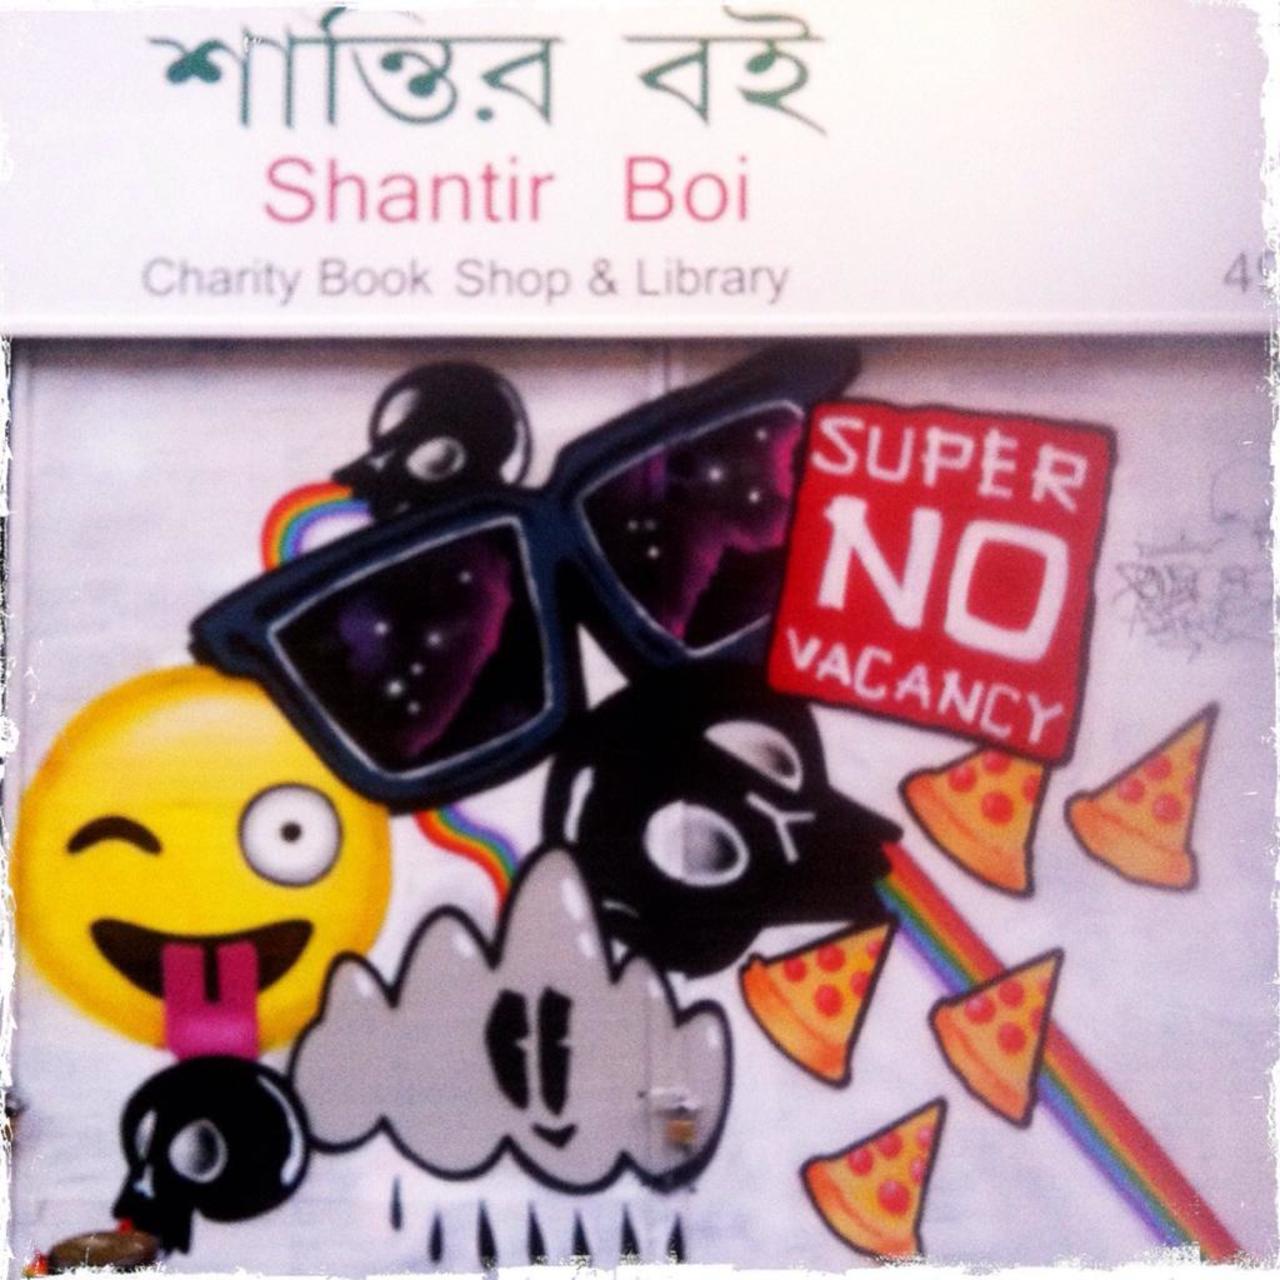 RT @BrickLaneArt: Shutter art at the Shantir Boi charity shop on Fashion Street

#art #streetart #graffiti http://t.co/CcdKLLuOD1